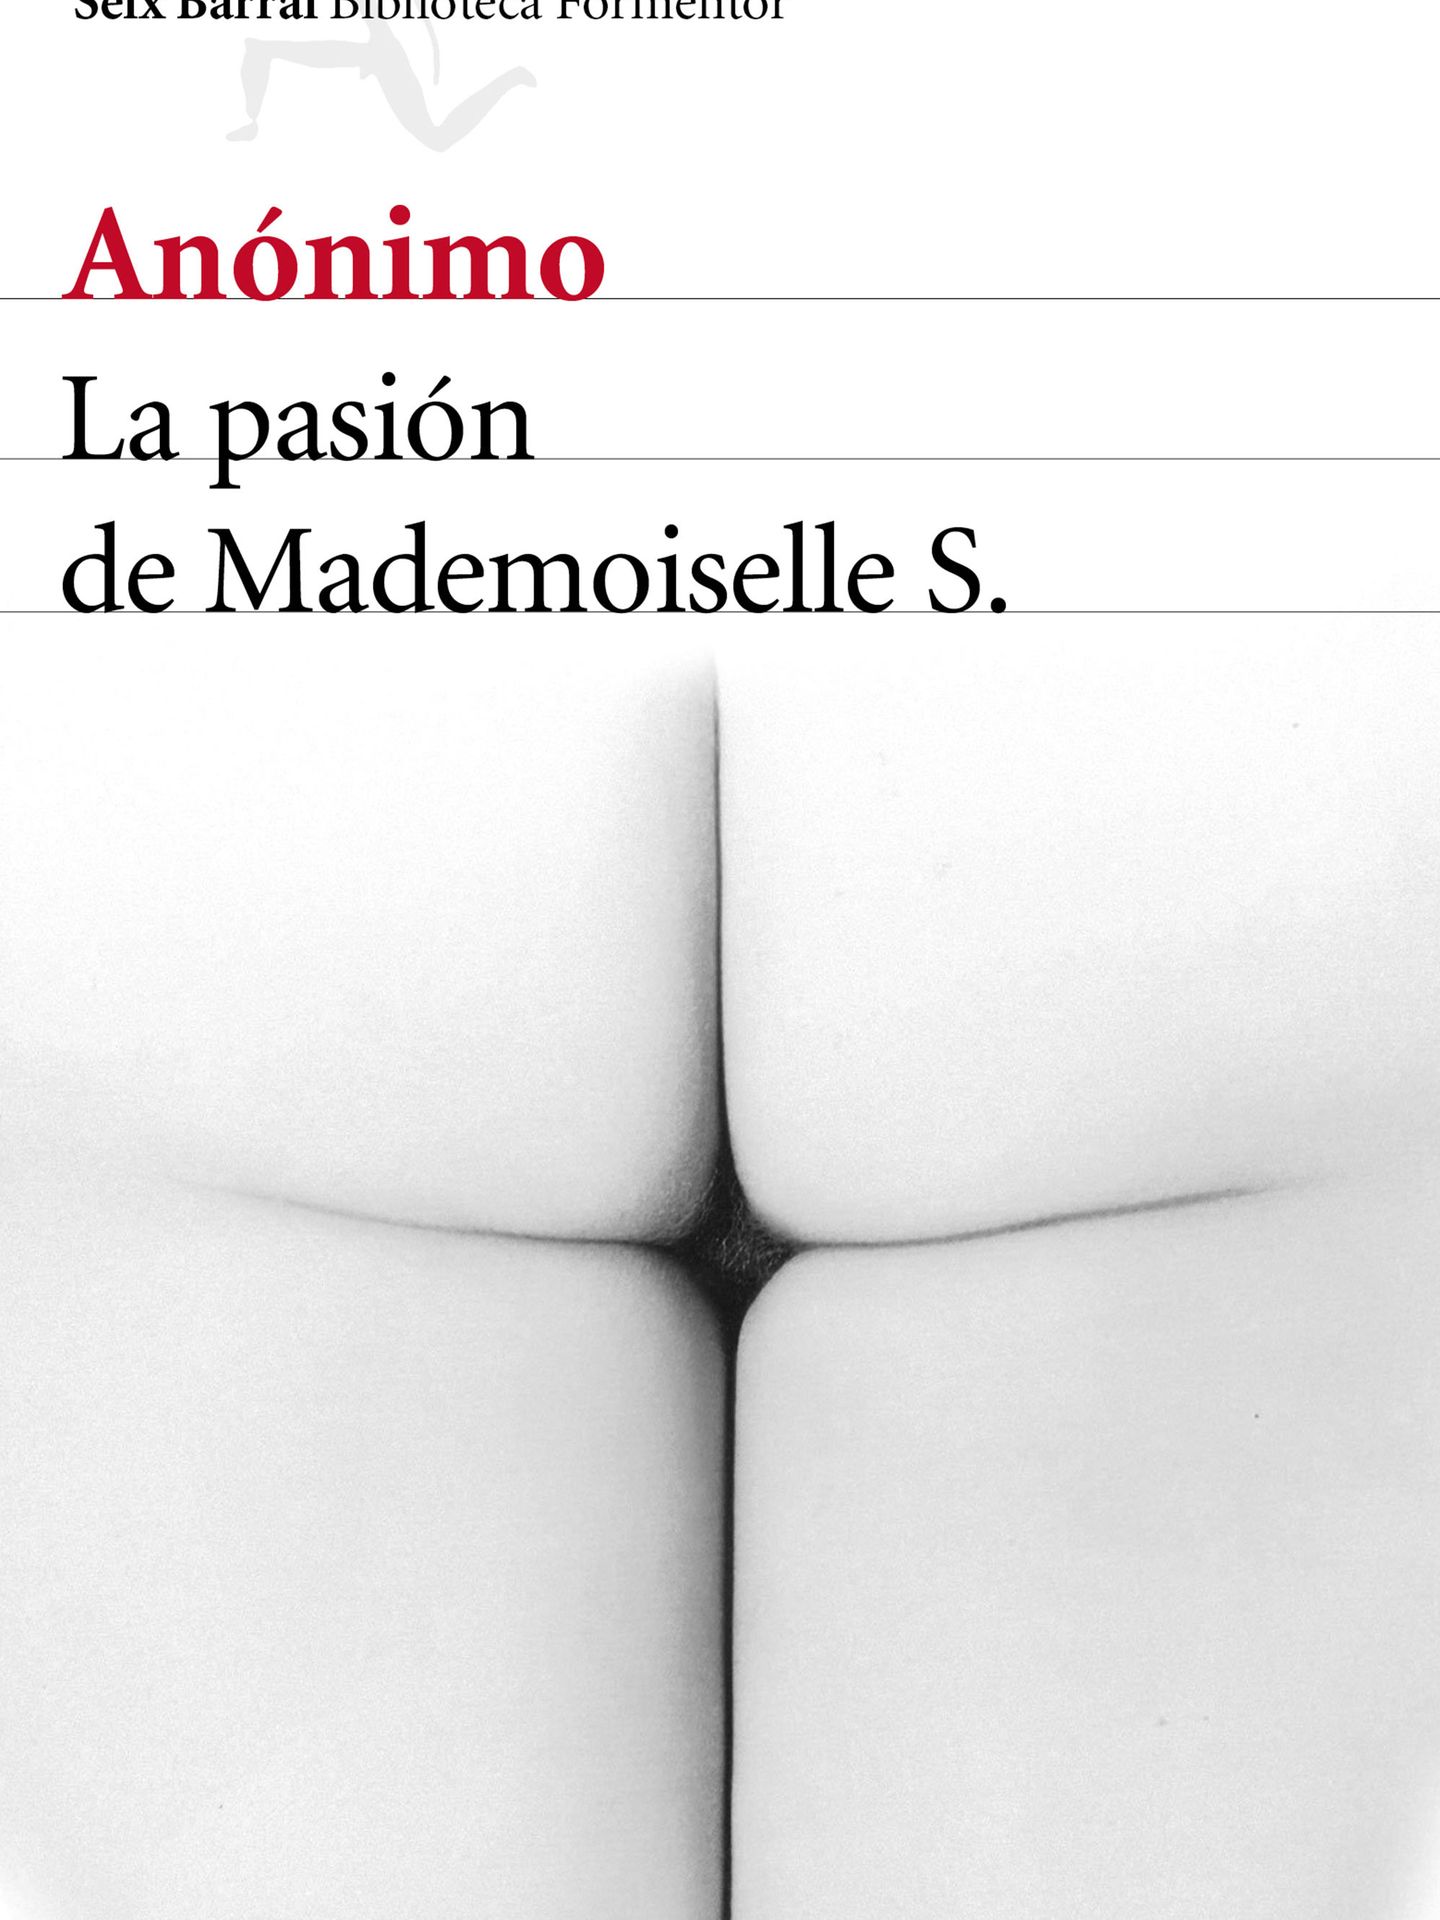 'La pasión de Mademoiselle S.', publicado por Seix Barral